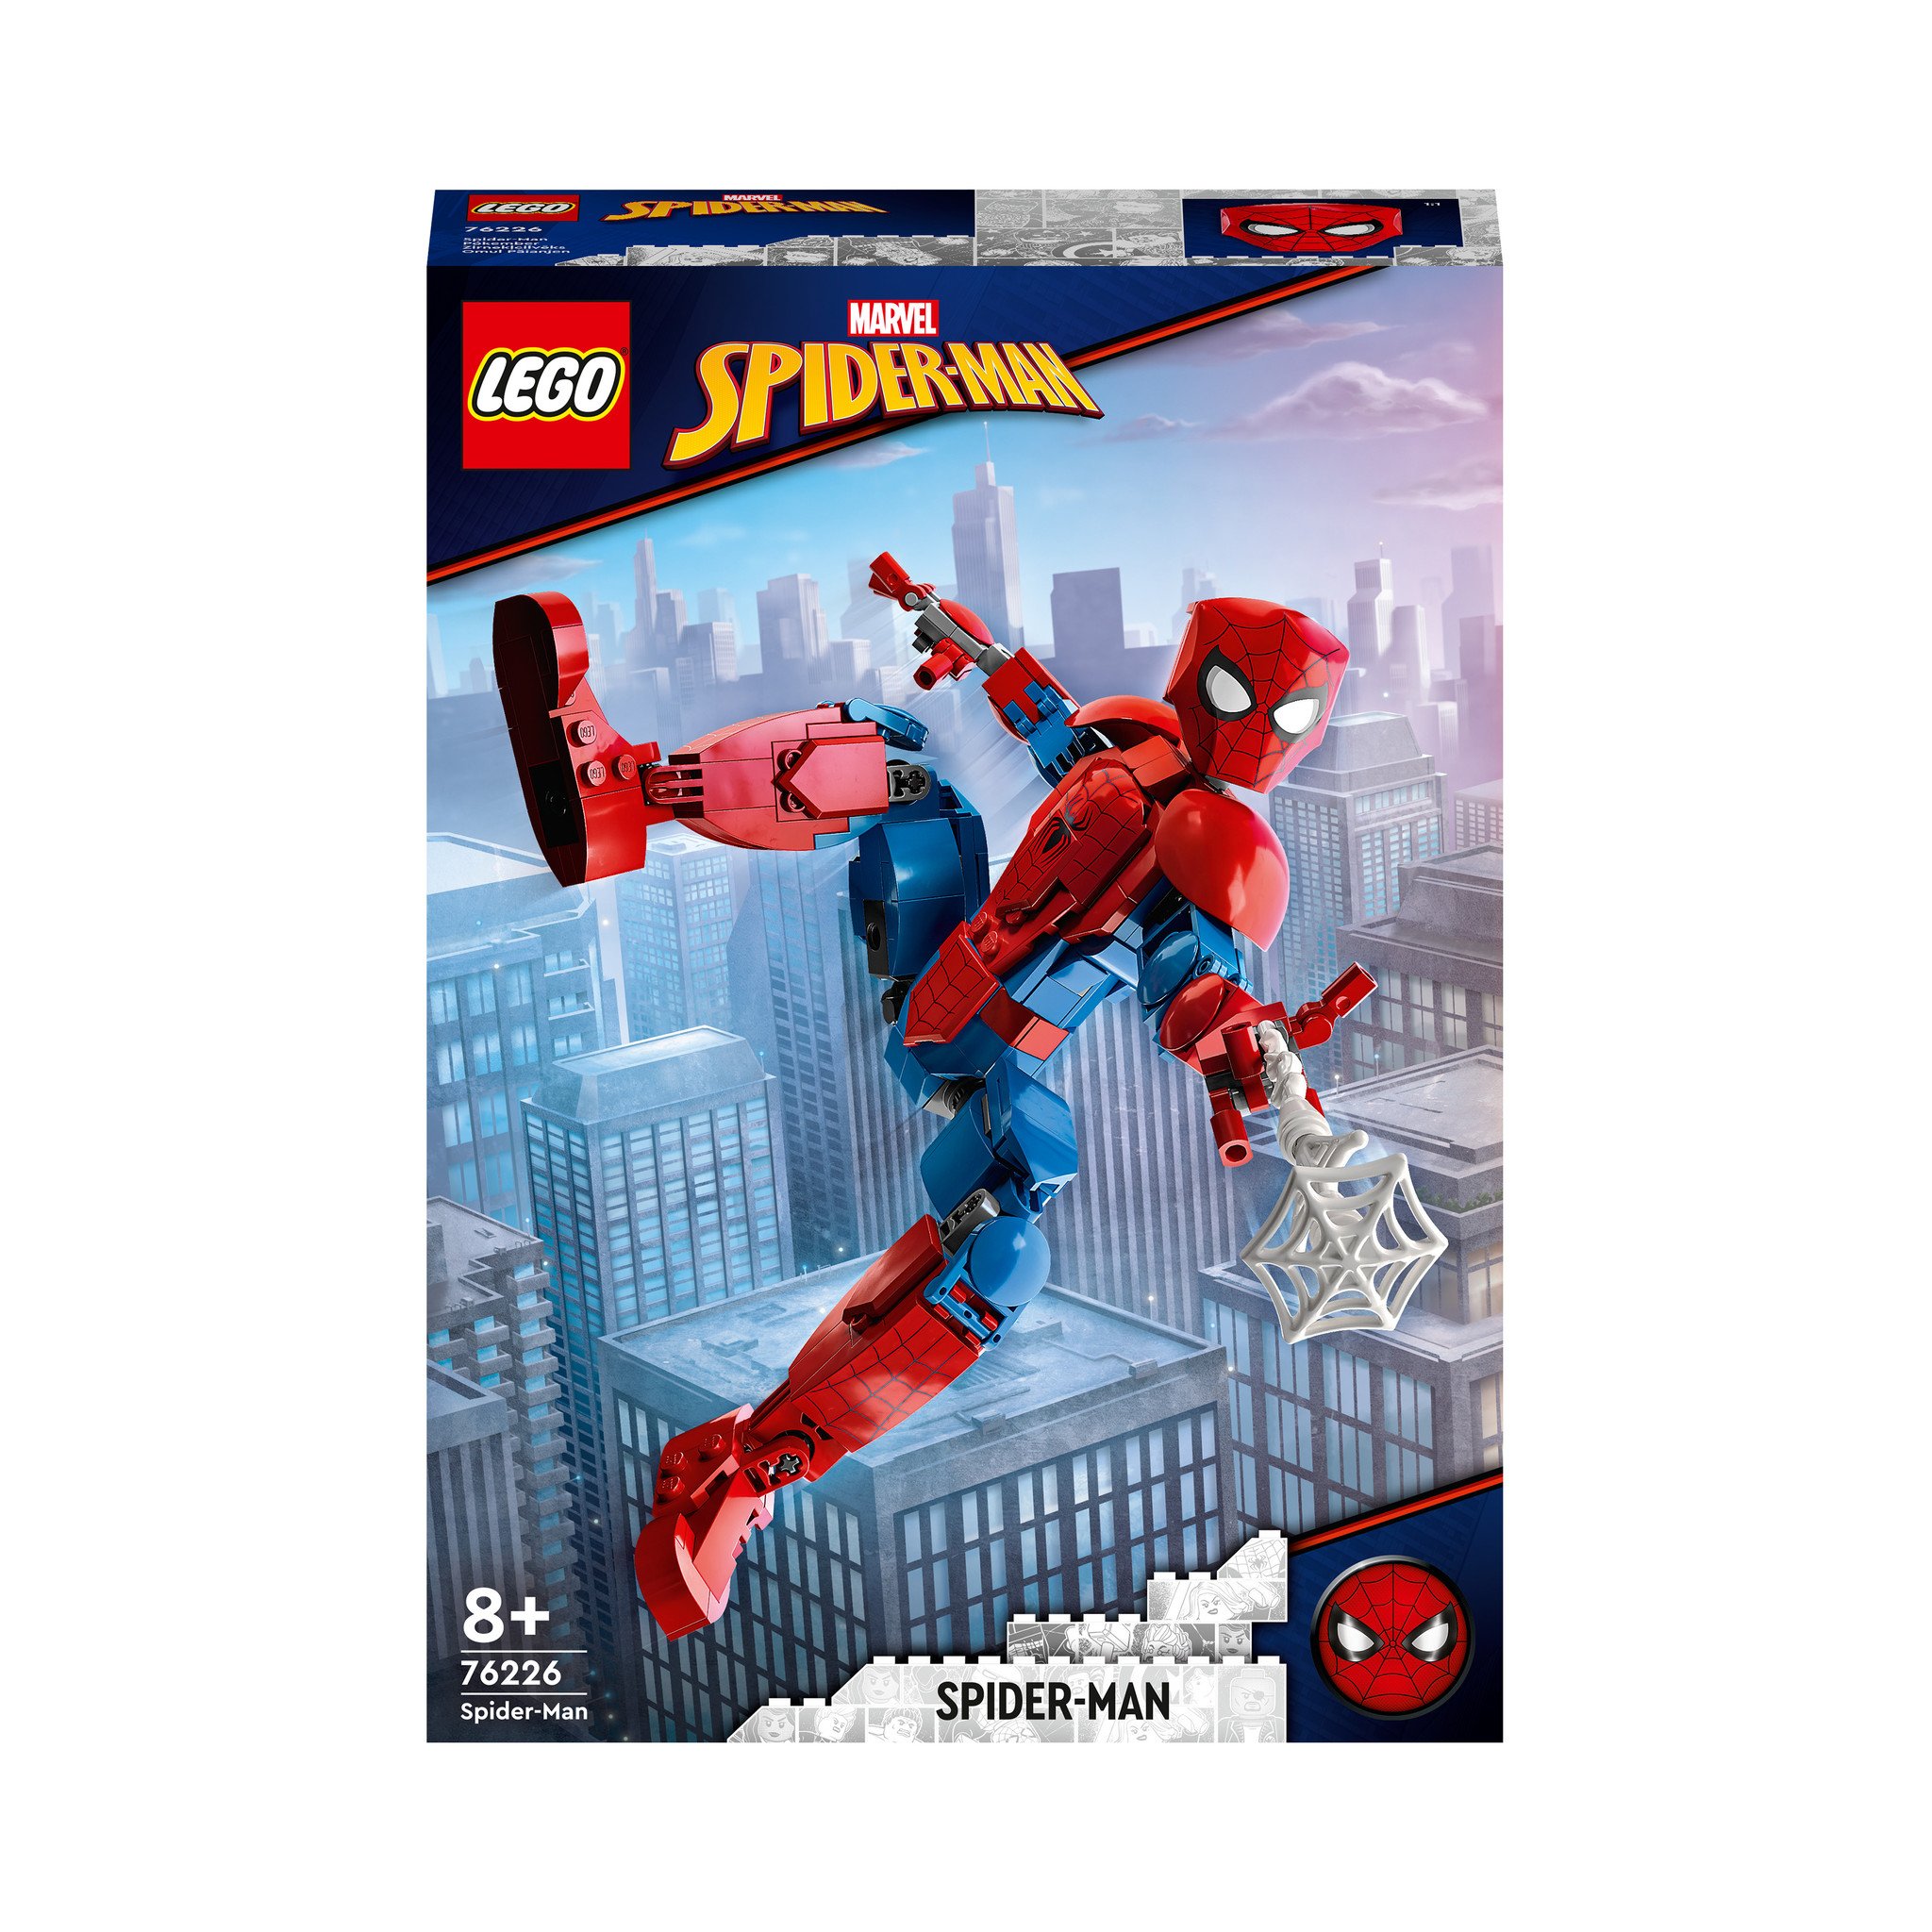 extase repetitie recorder LEGO 76226 Marvel Spider-Man figuur, Superhelden Collectible - t Klavertje  Vier